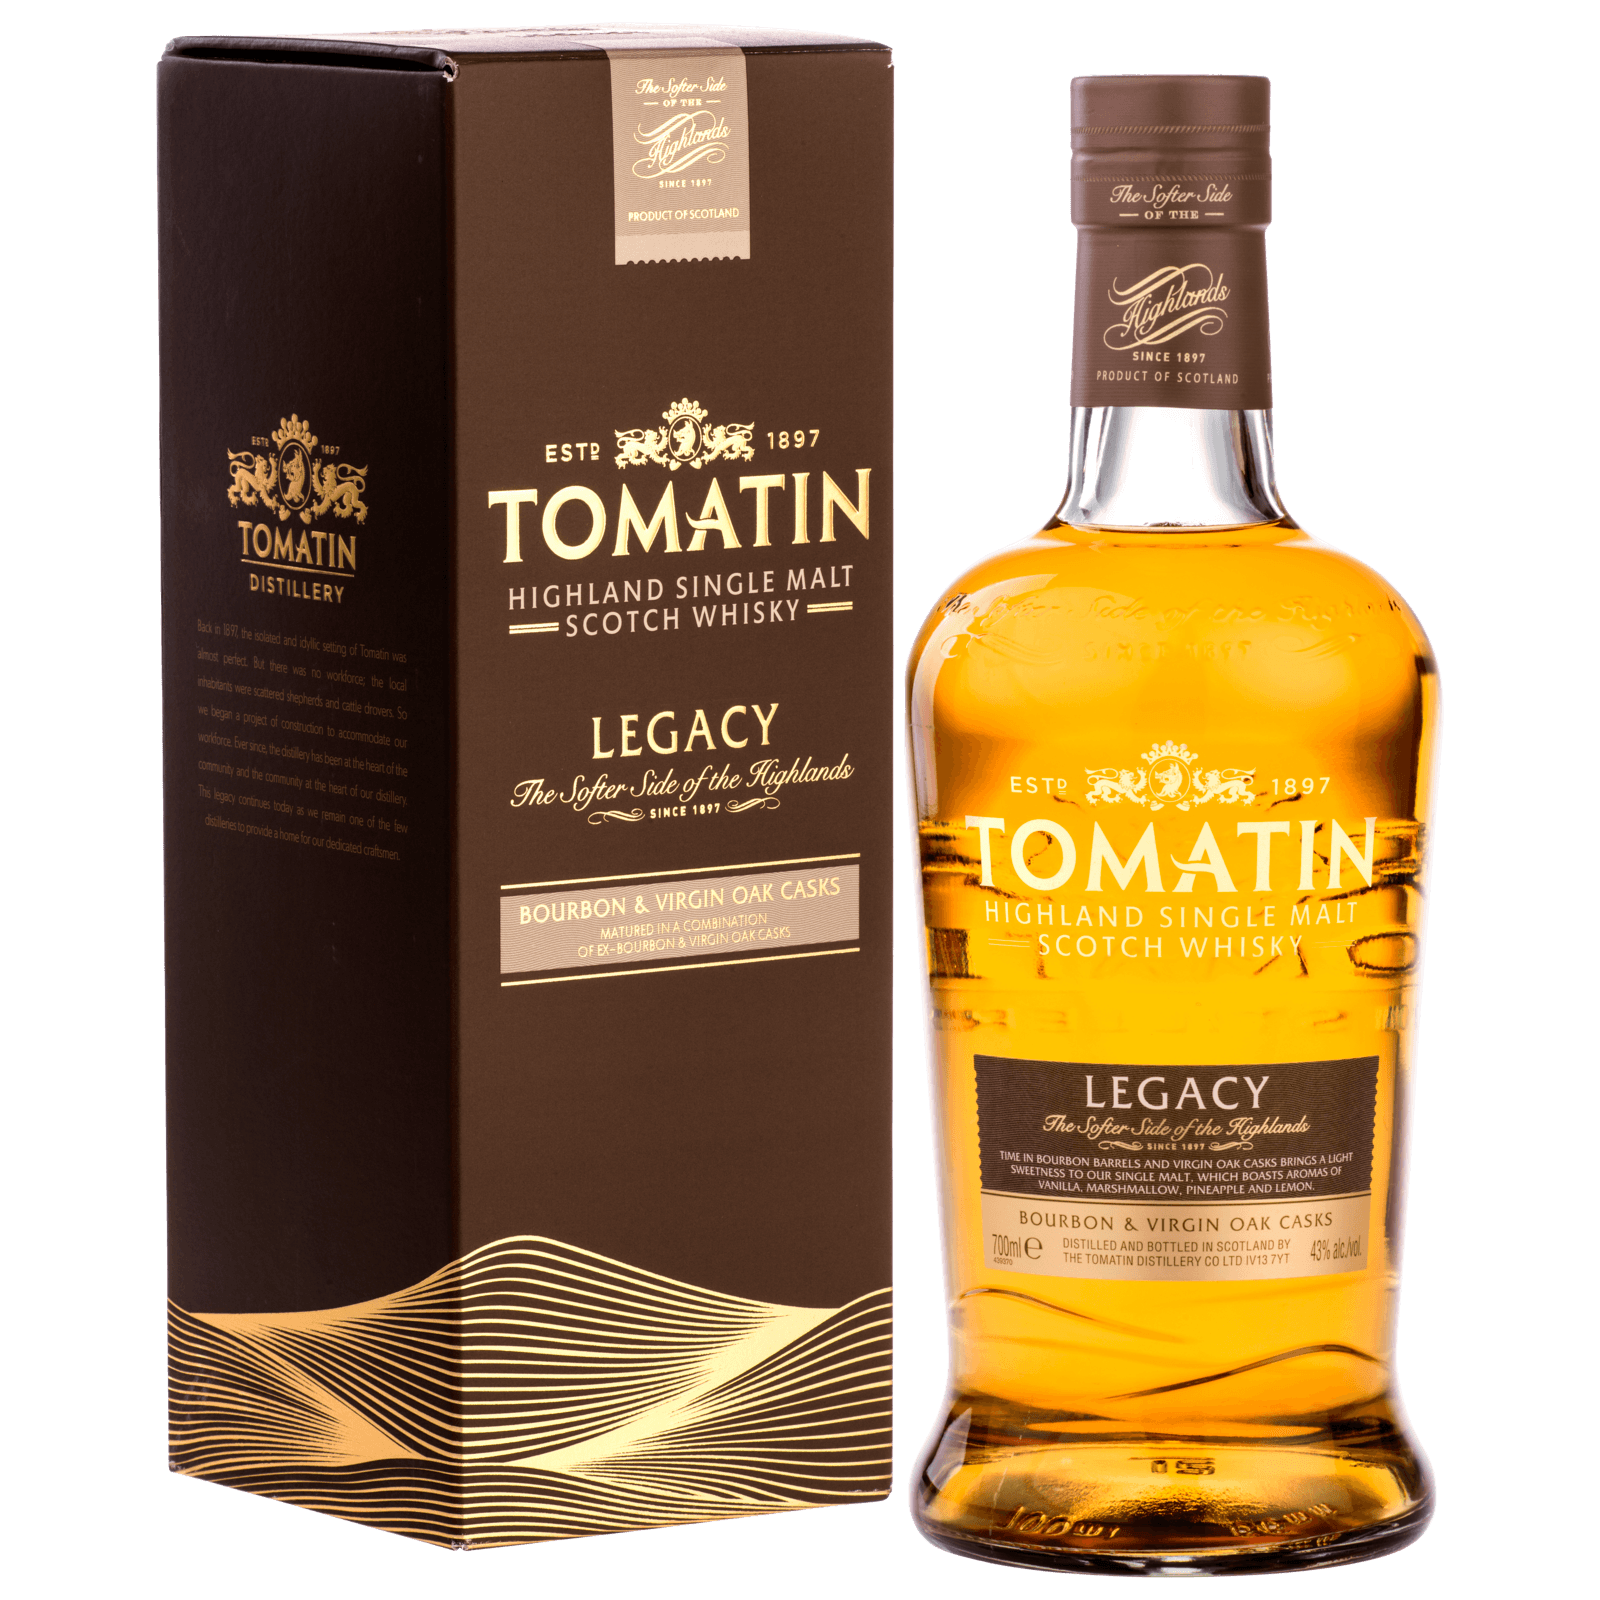 Tomatin Highland Single Malt Scotch bei REWE Legacy 0,7l bestellen! Whisky online